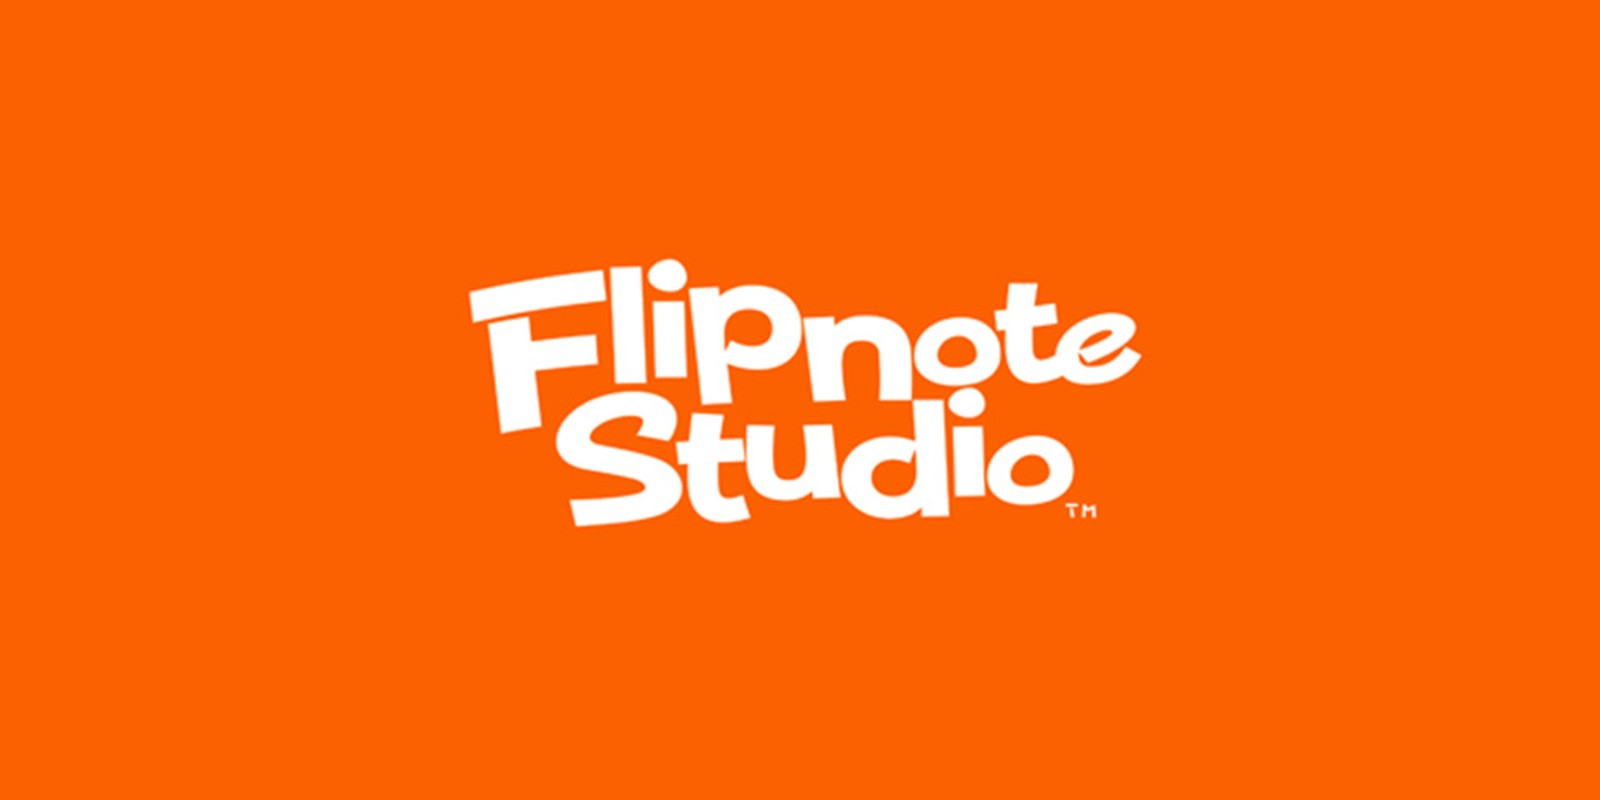 flipnote studio rom download